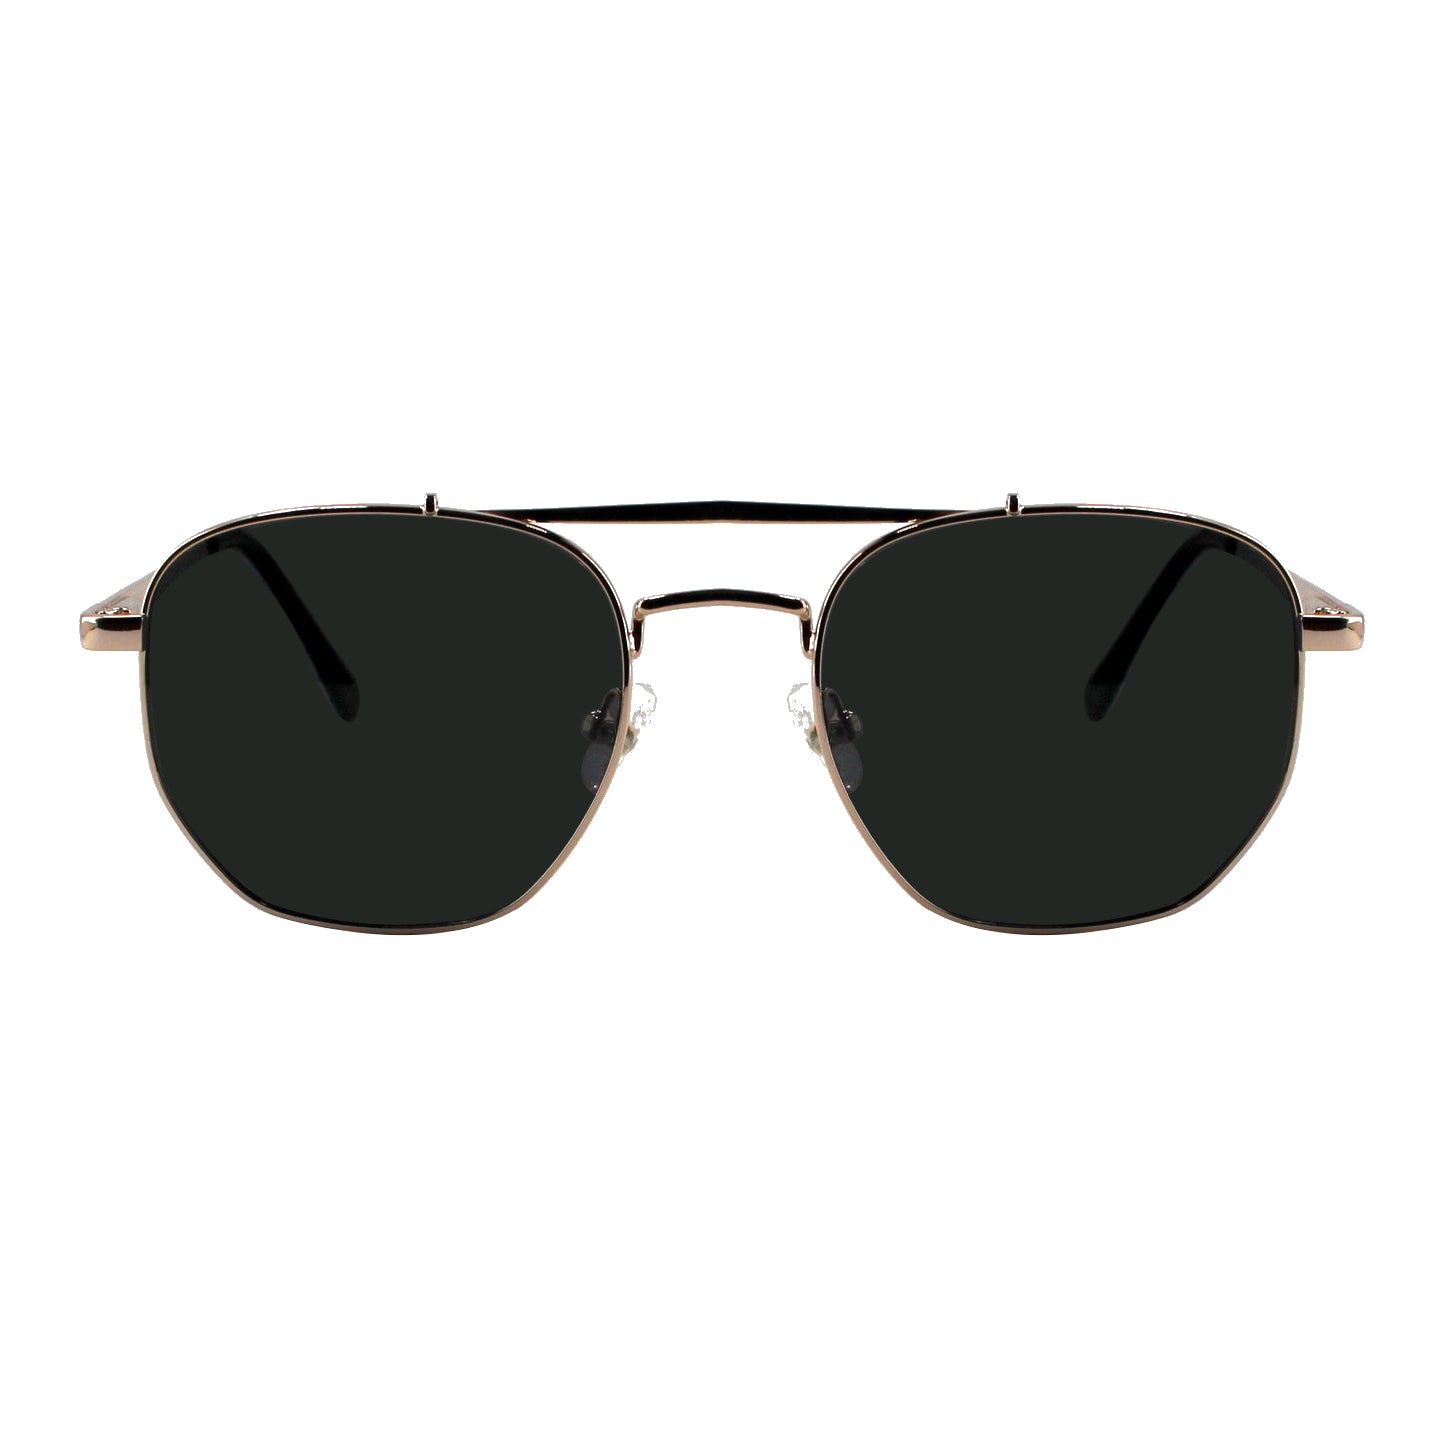 Shades X - Polarized Sunglasses | Model 29025